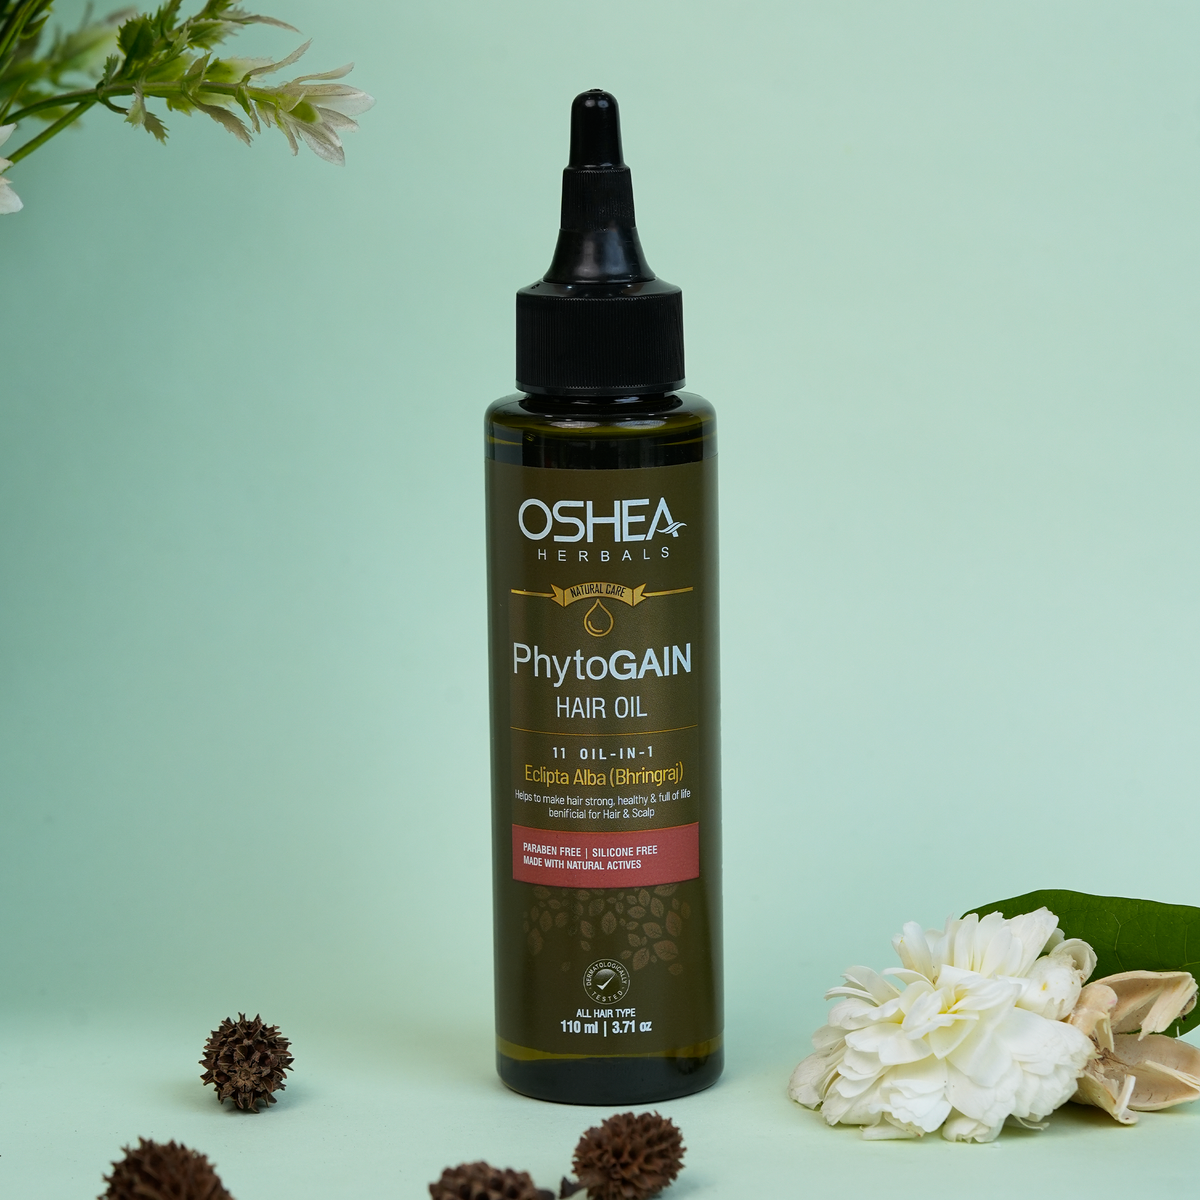 PhytoGain Hair Oil Oshea Herbals